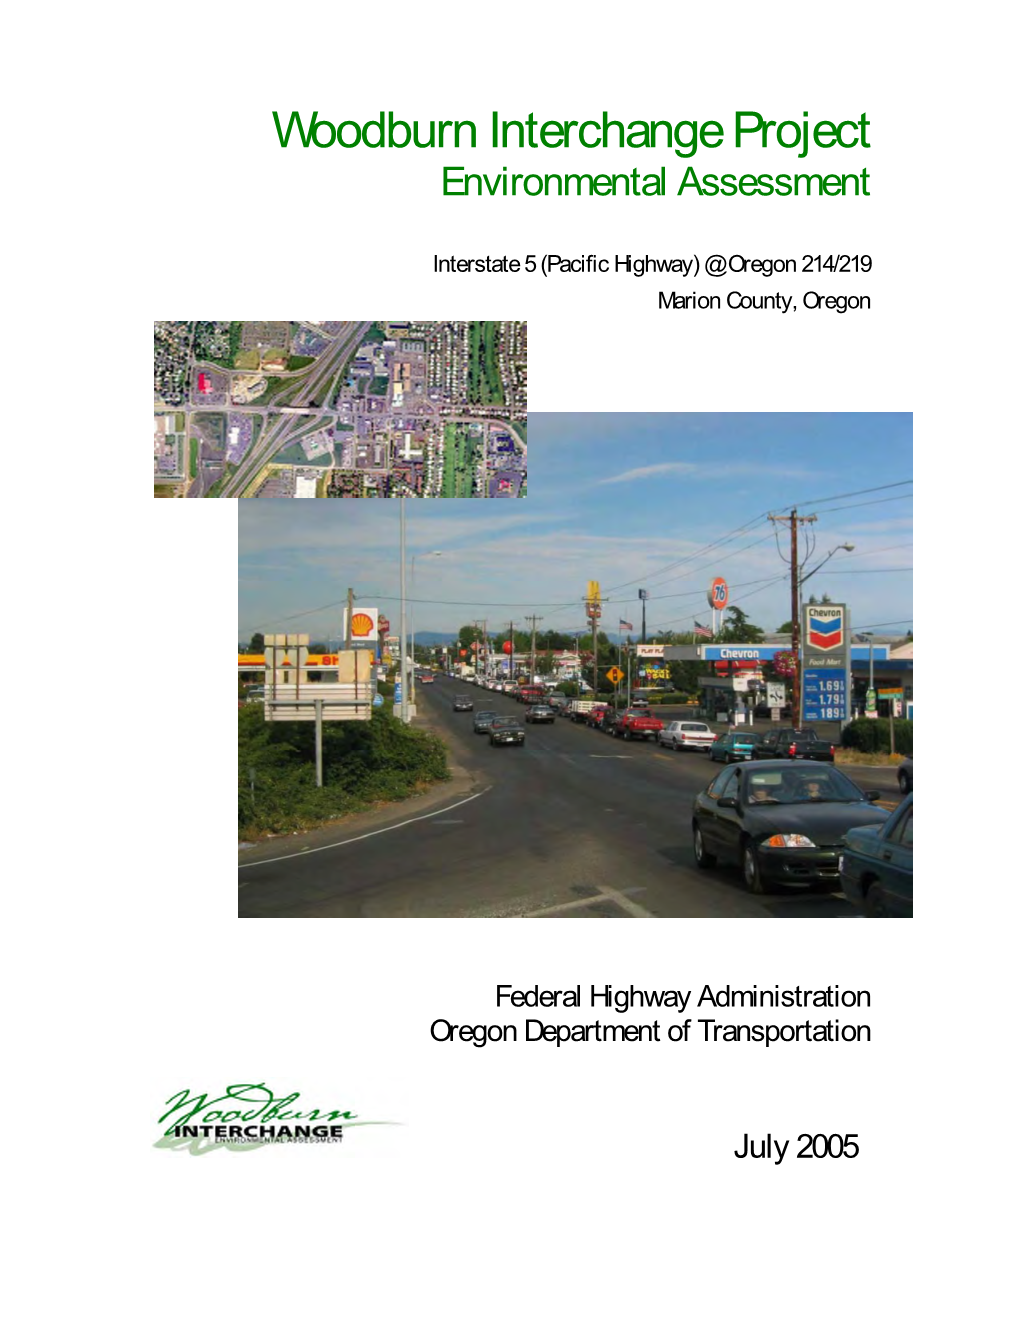 Woodburn Interchange Project Environmental Assessment